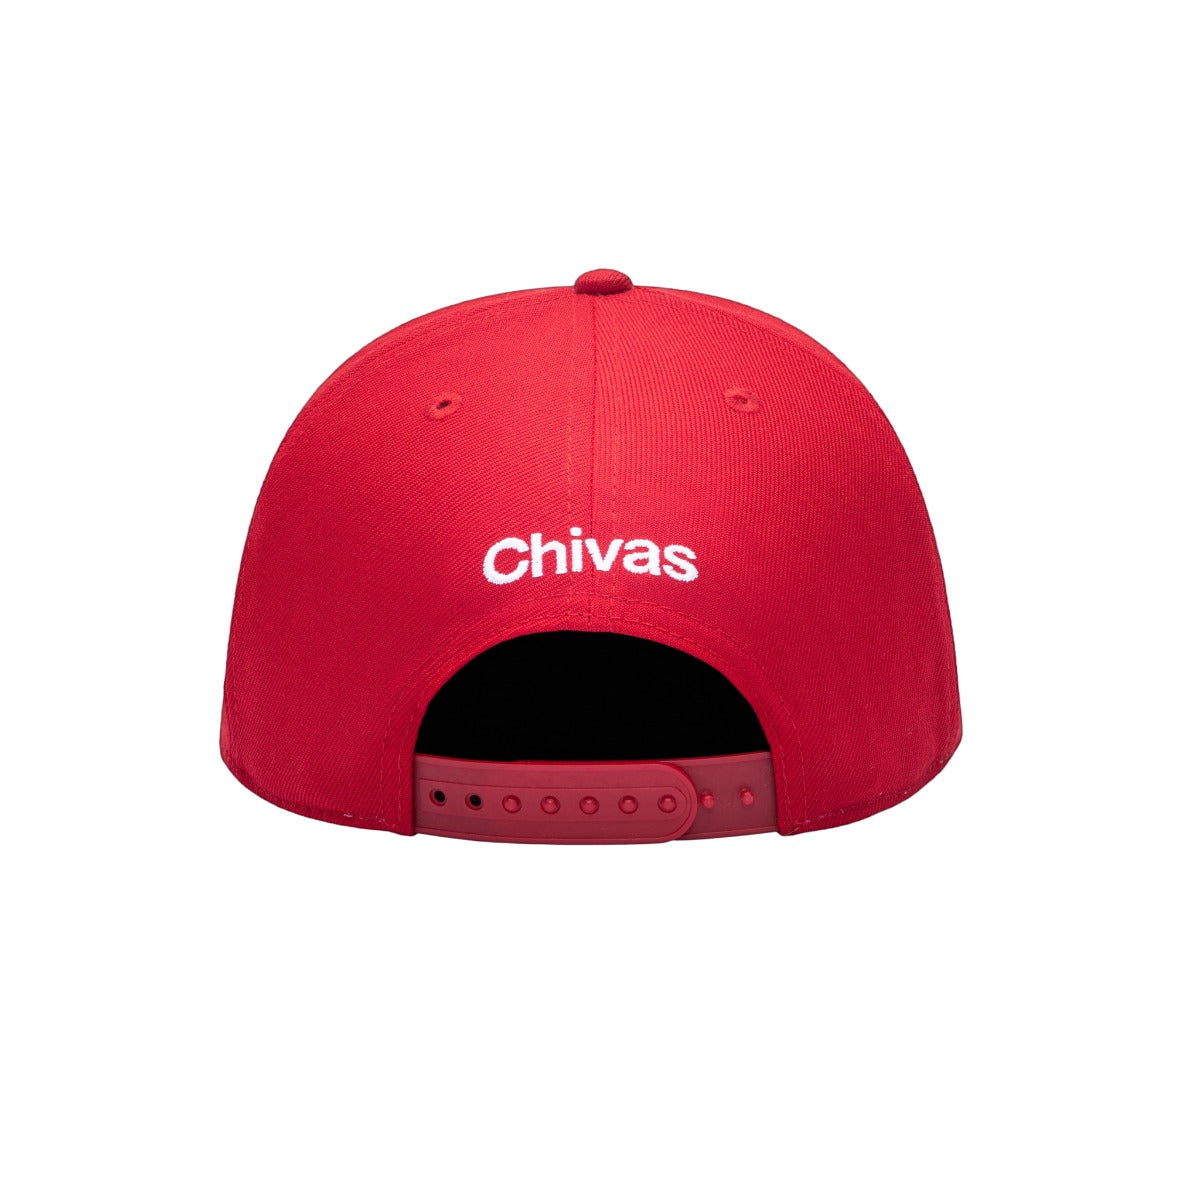 FI Collection Chivas Elite Snapback Hat - Red (Back)